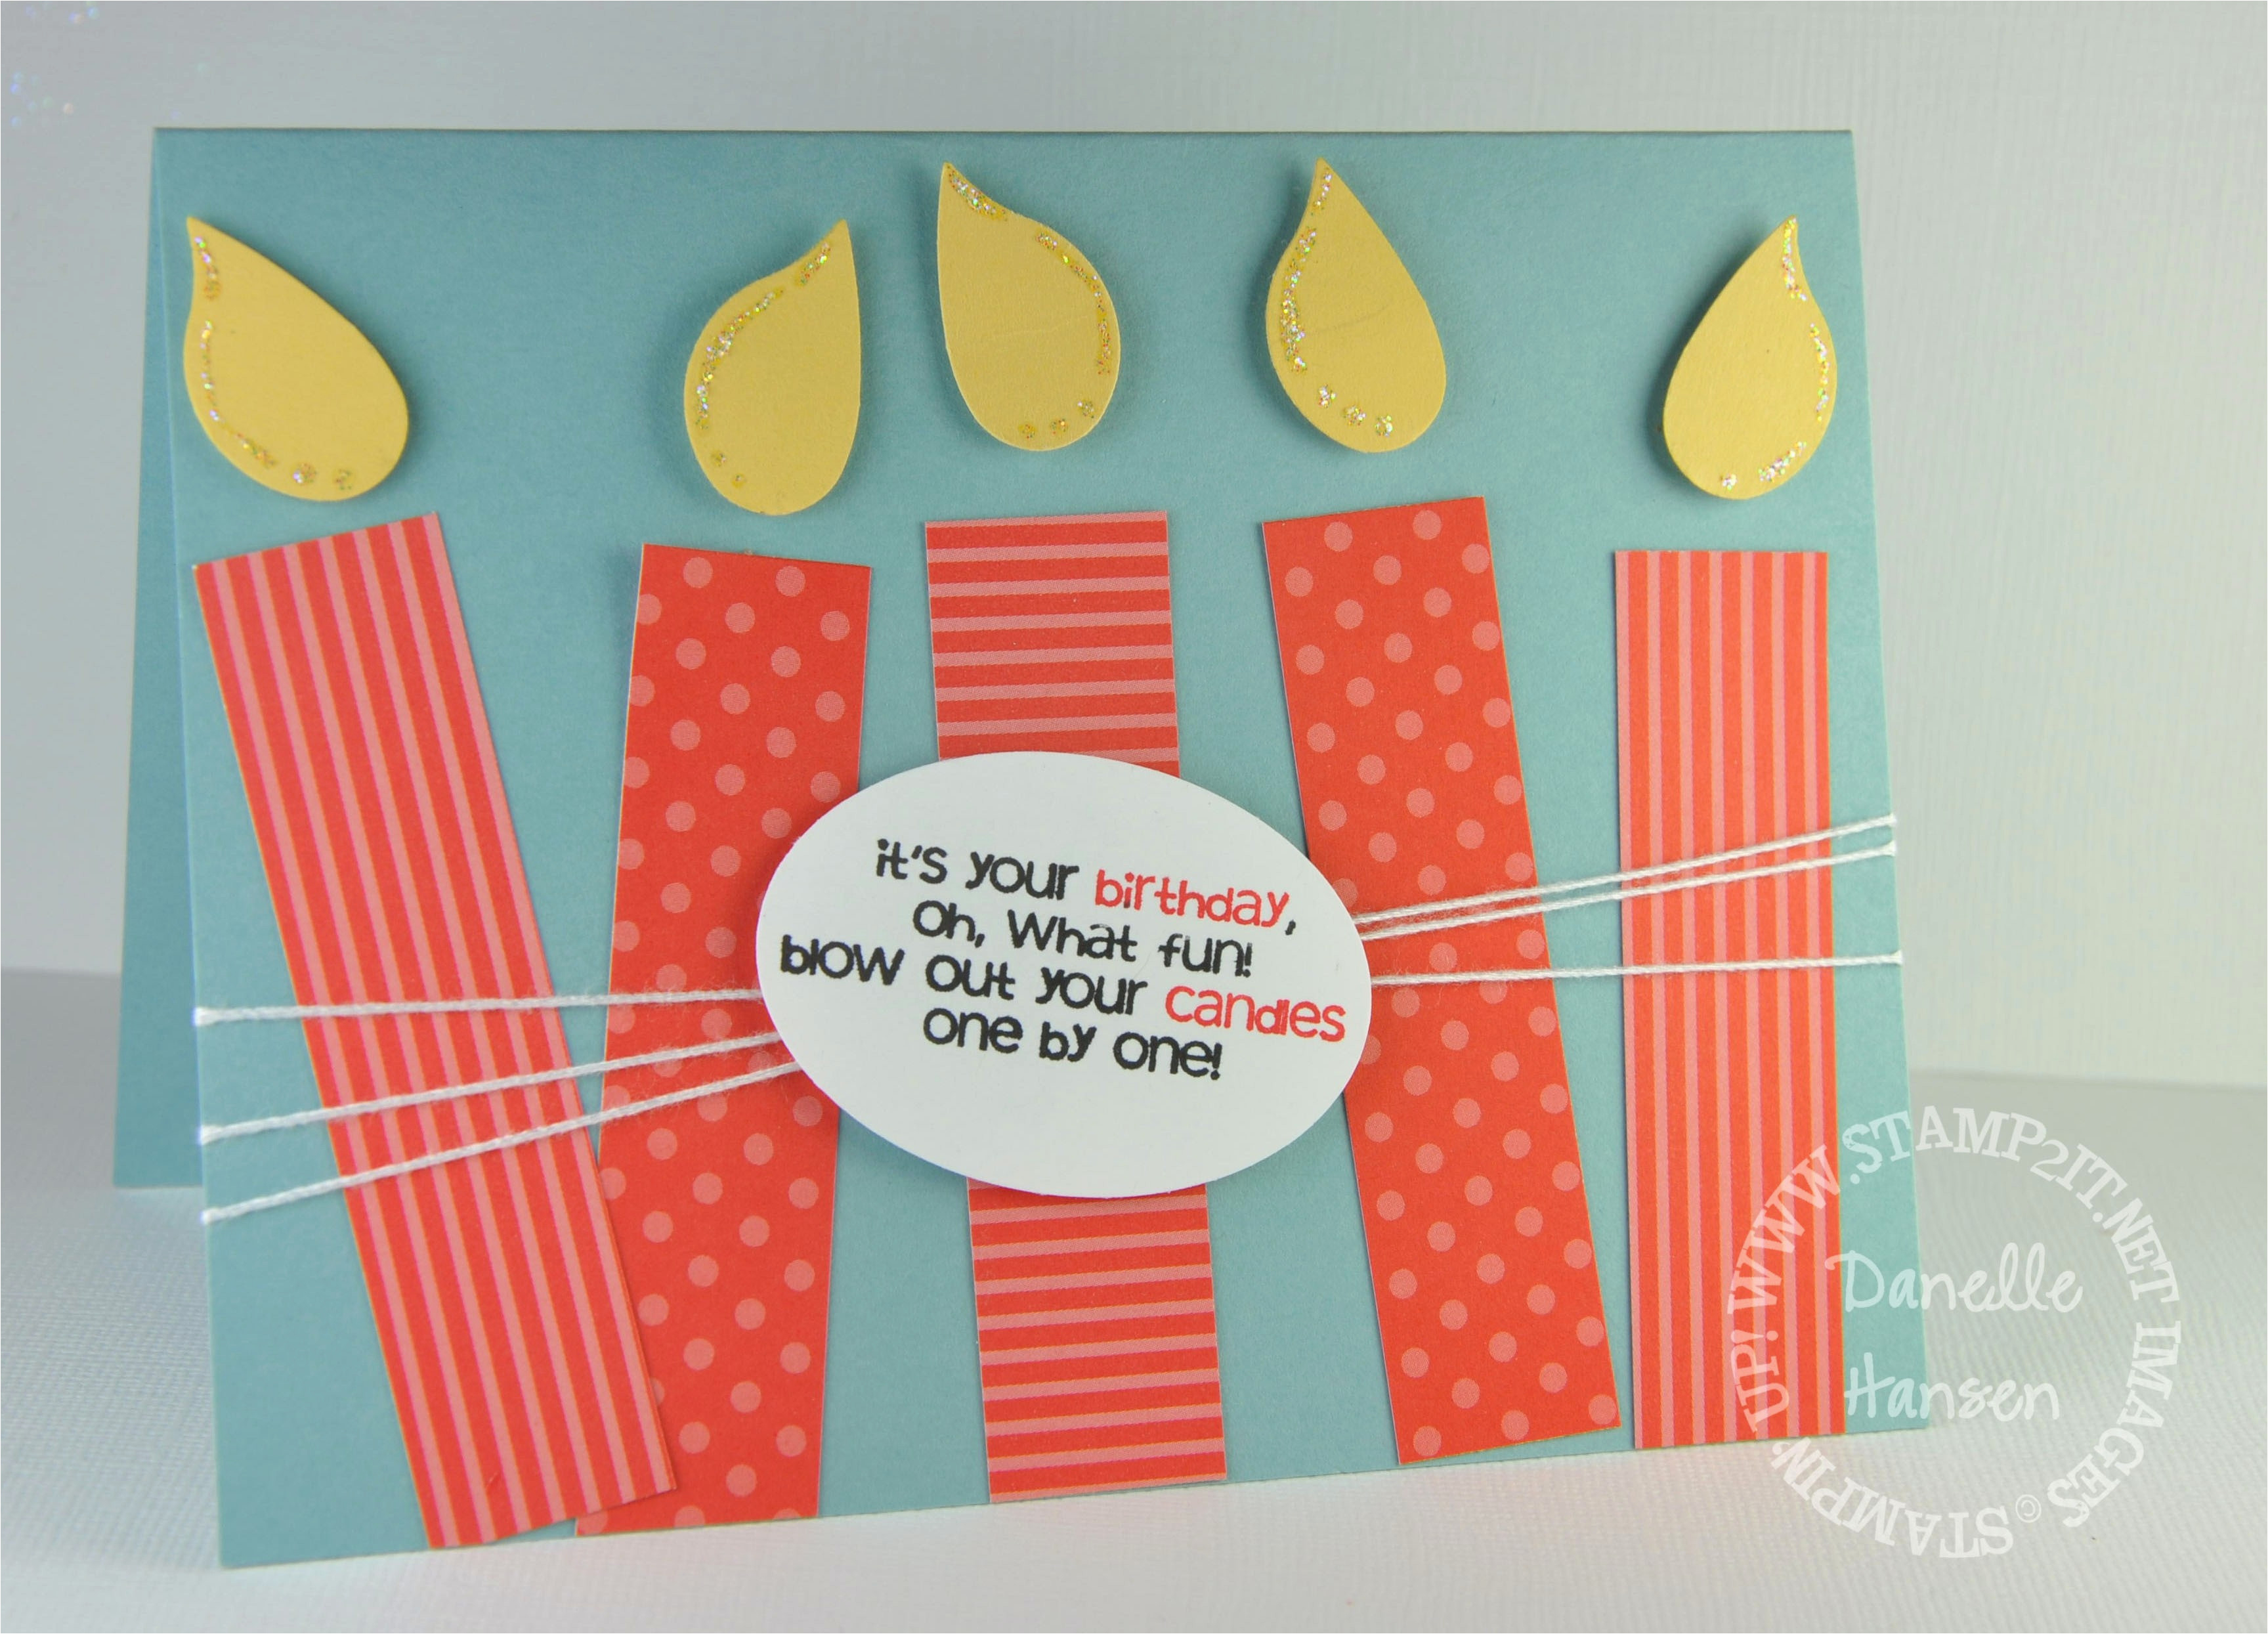 Handmade Birthday Greeting Cards Ideas Diy Birthday Cards For Husband Creative Handmade Birthday Card Ideas